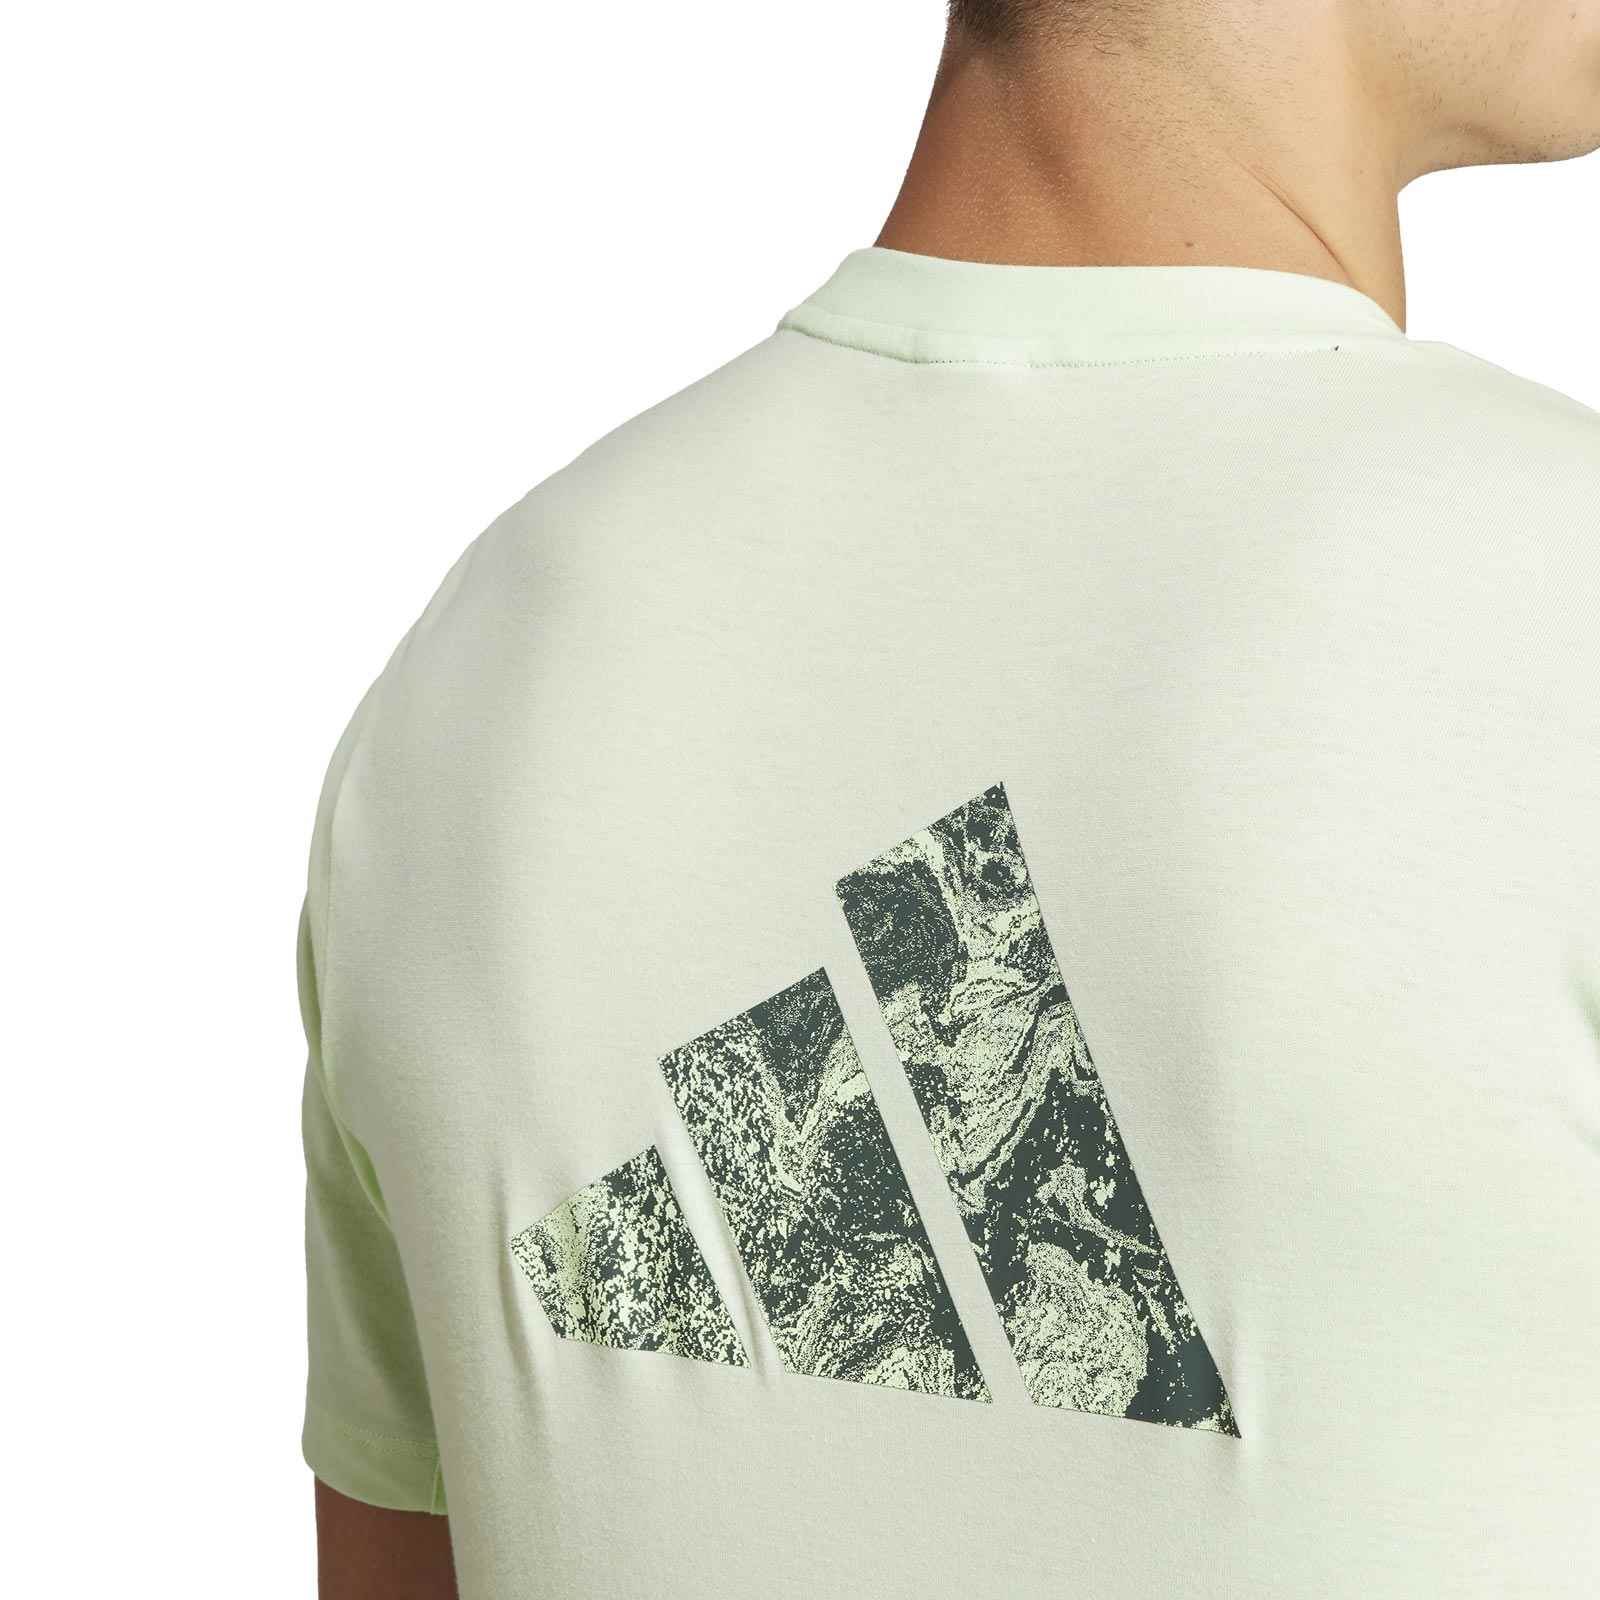 adidas Work Out Logo Mens T-Shirt